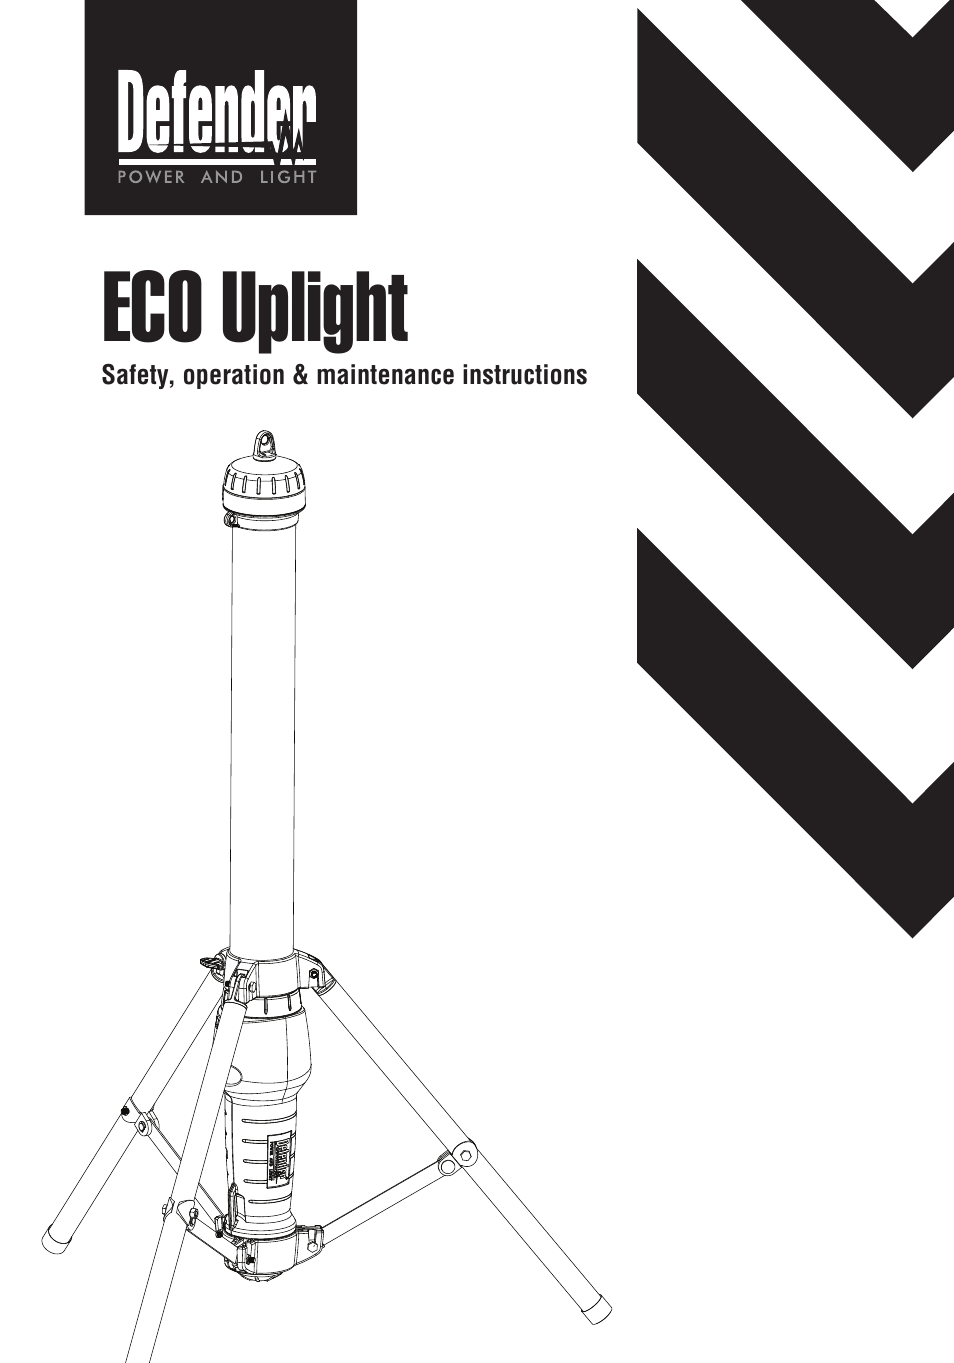 ECO Uplight